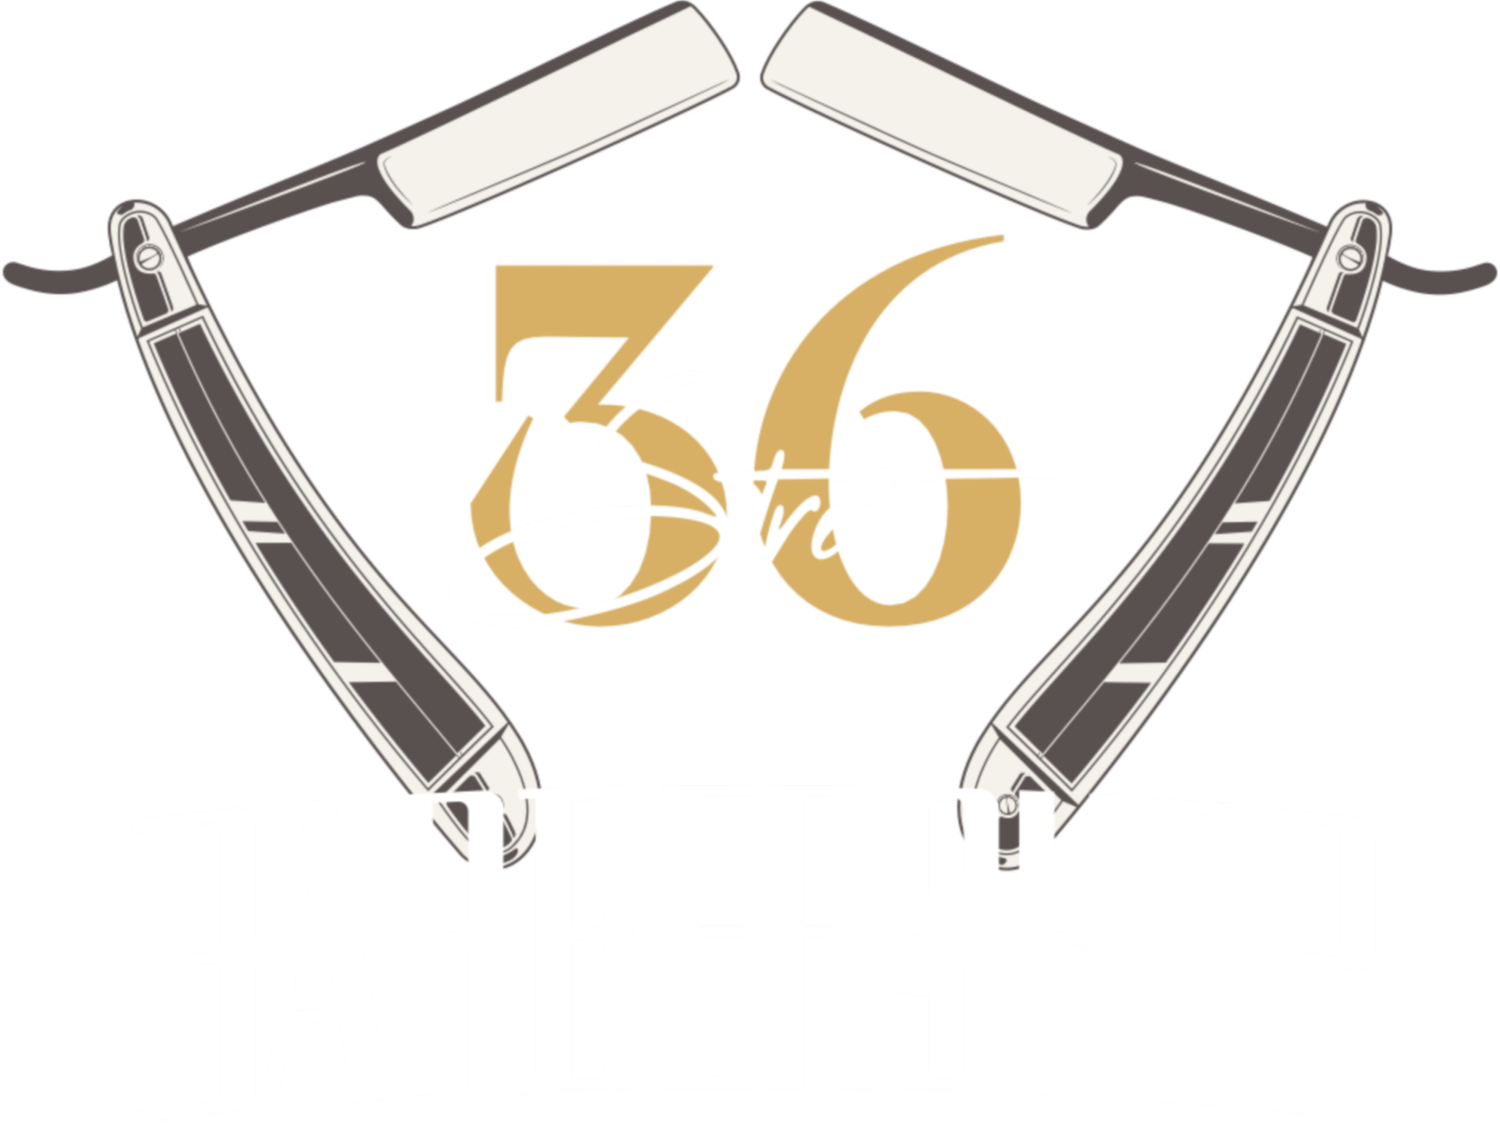 36th Street Barbershop